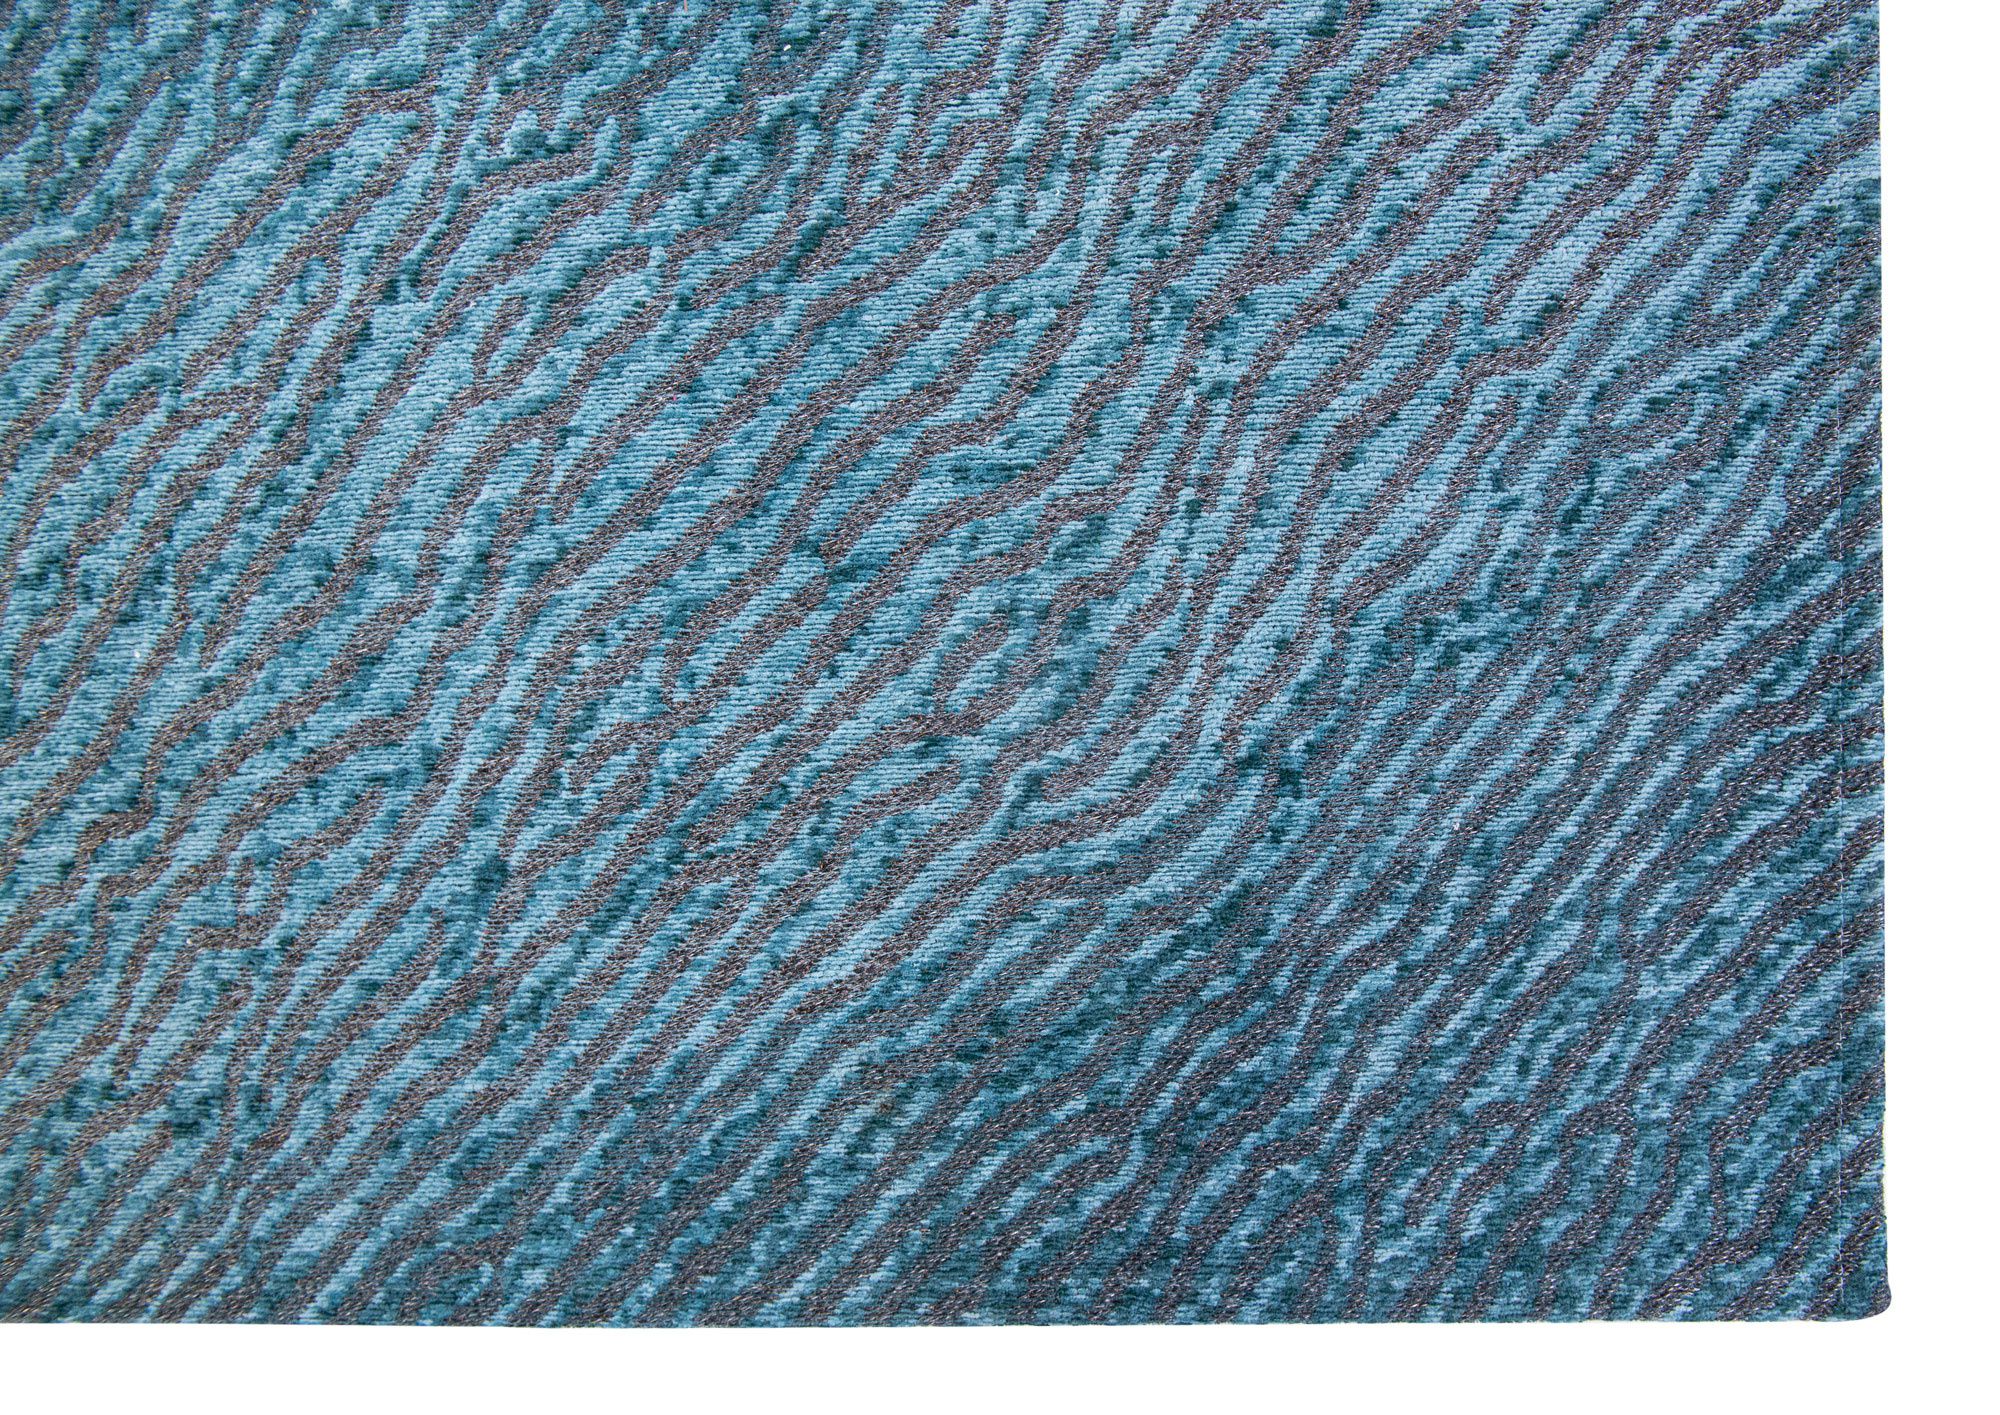 vloerkleed louis de poortere shores waves blue nile 140cm x 200cm